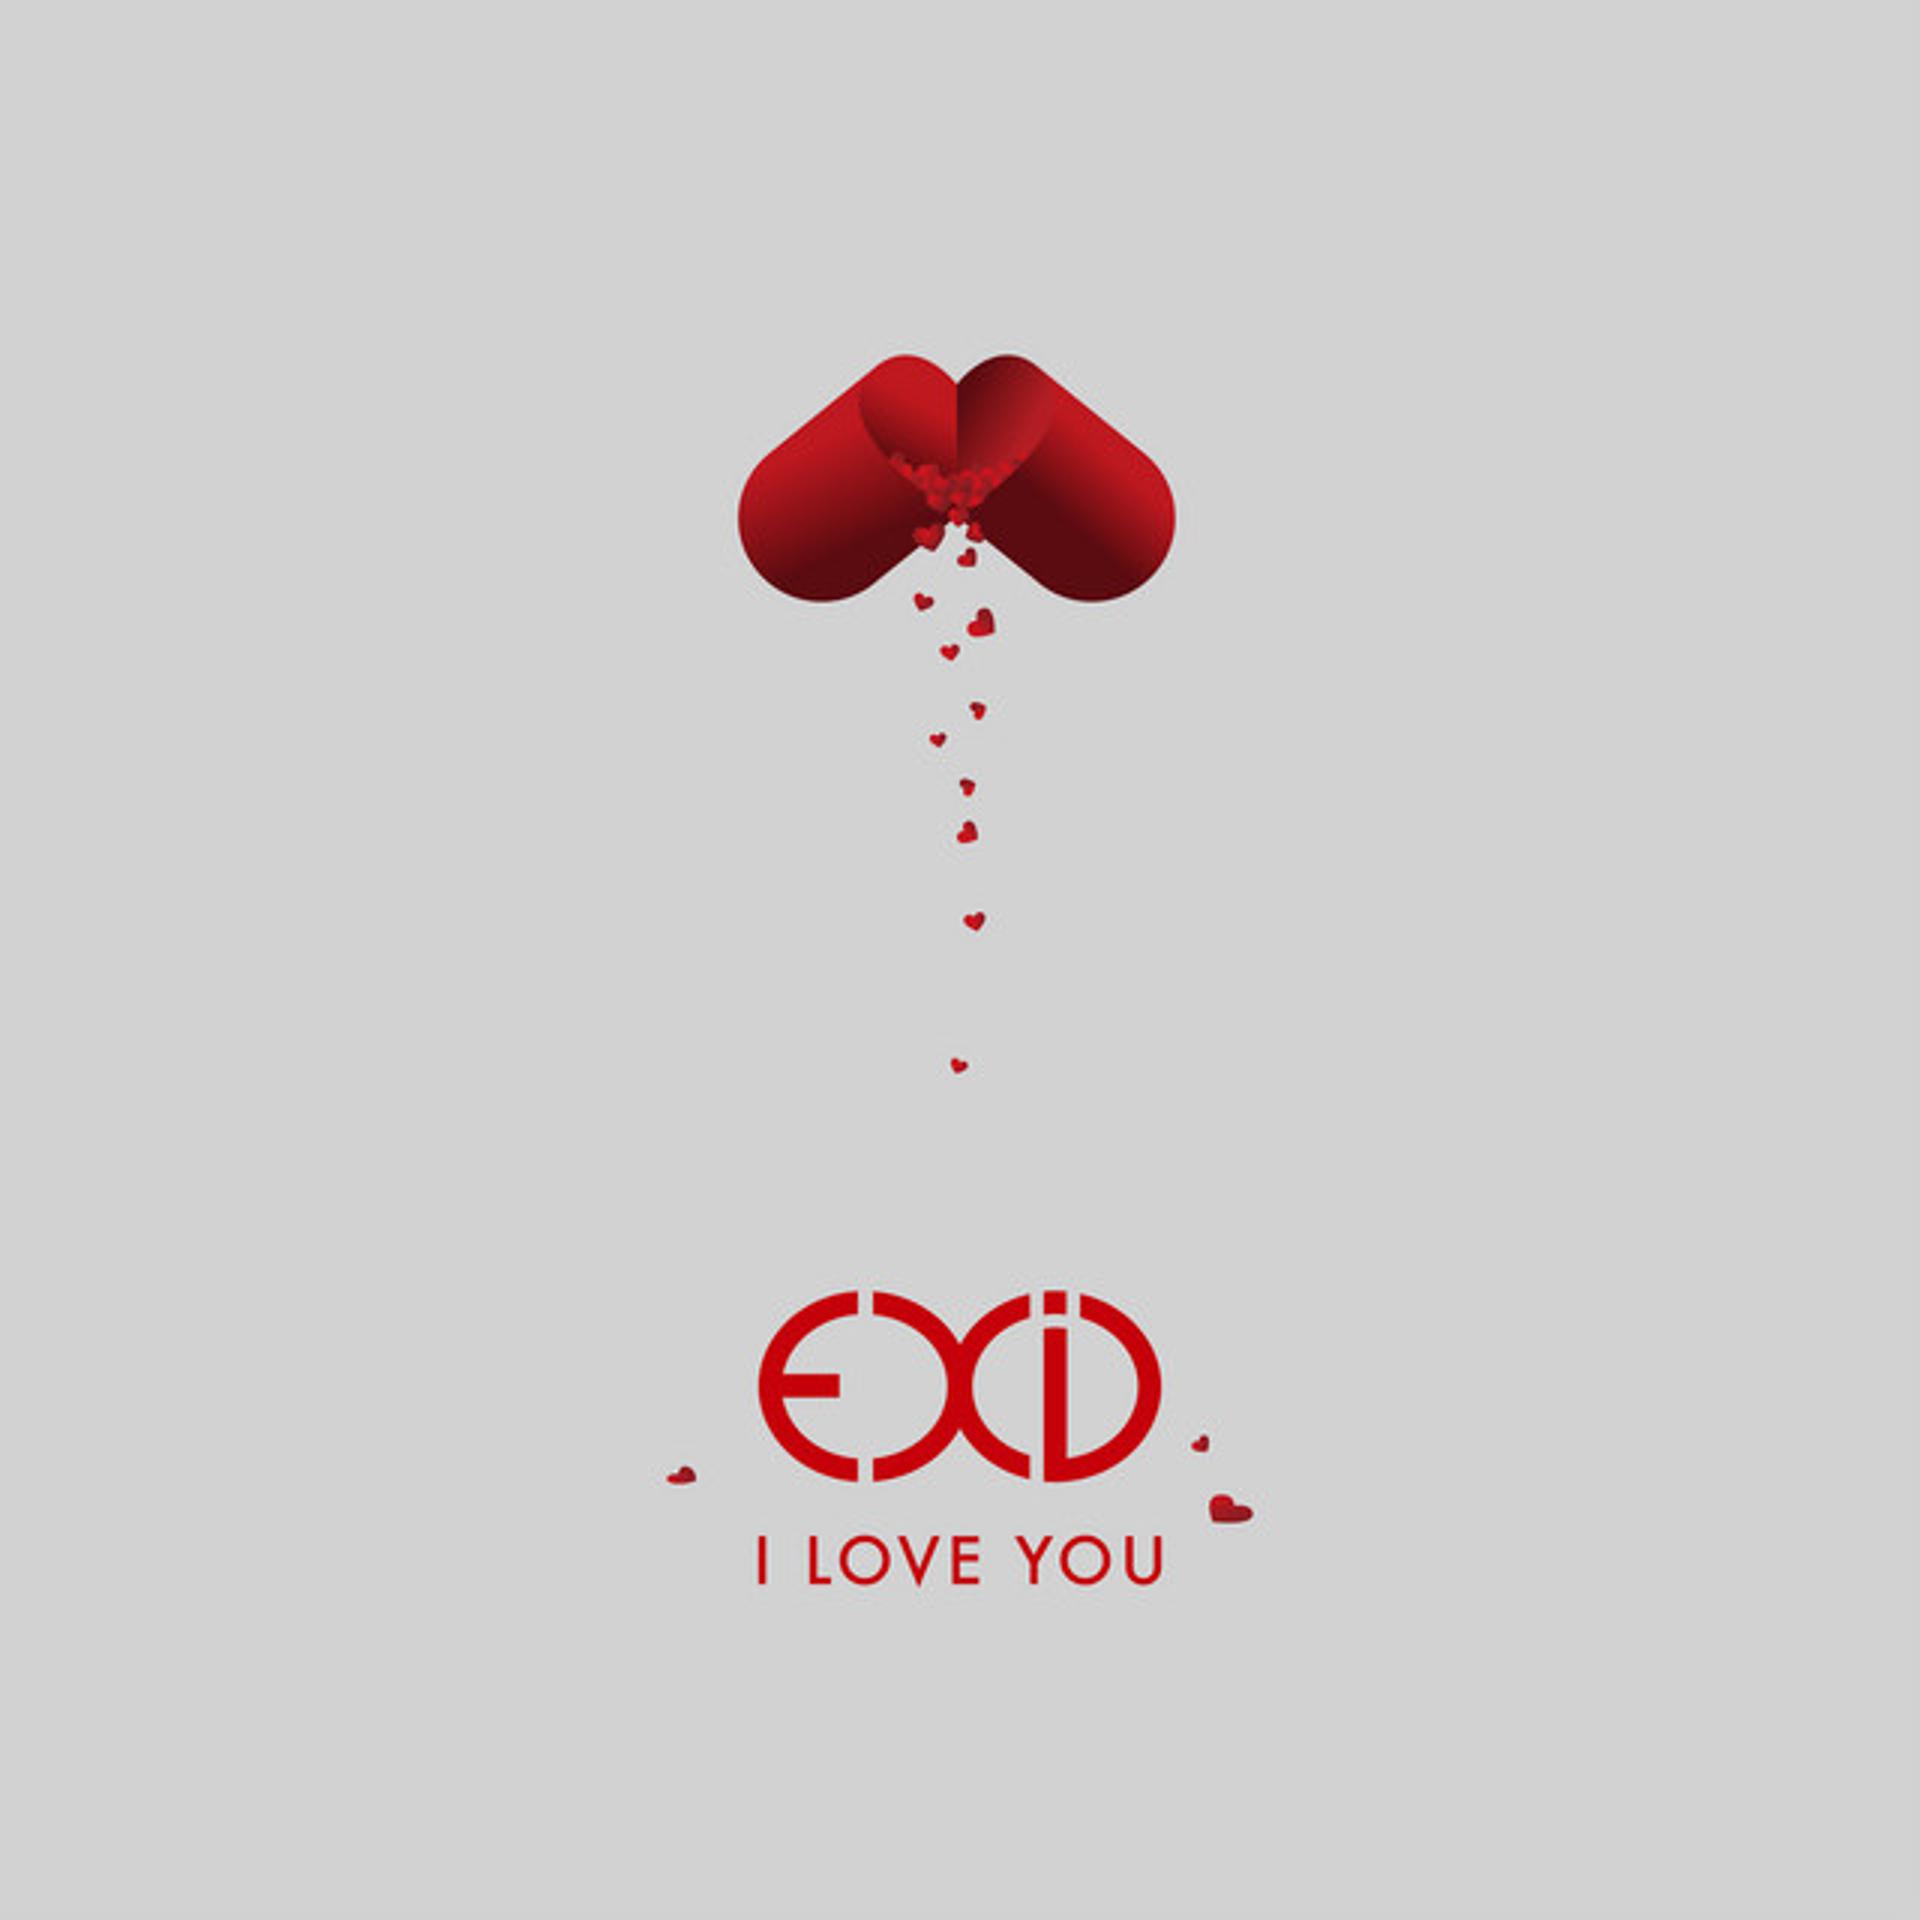 Лов зе ю. I Love you. EXID I Love you. EXID iloveyou. I Love обложка.